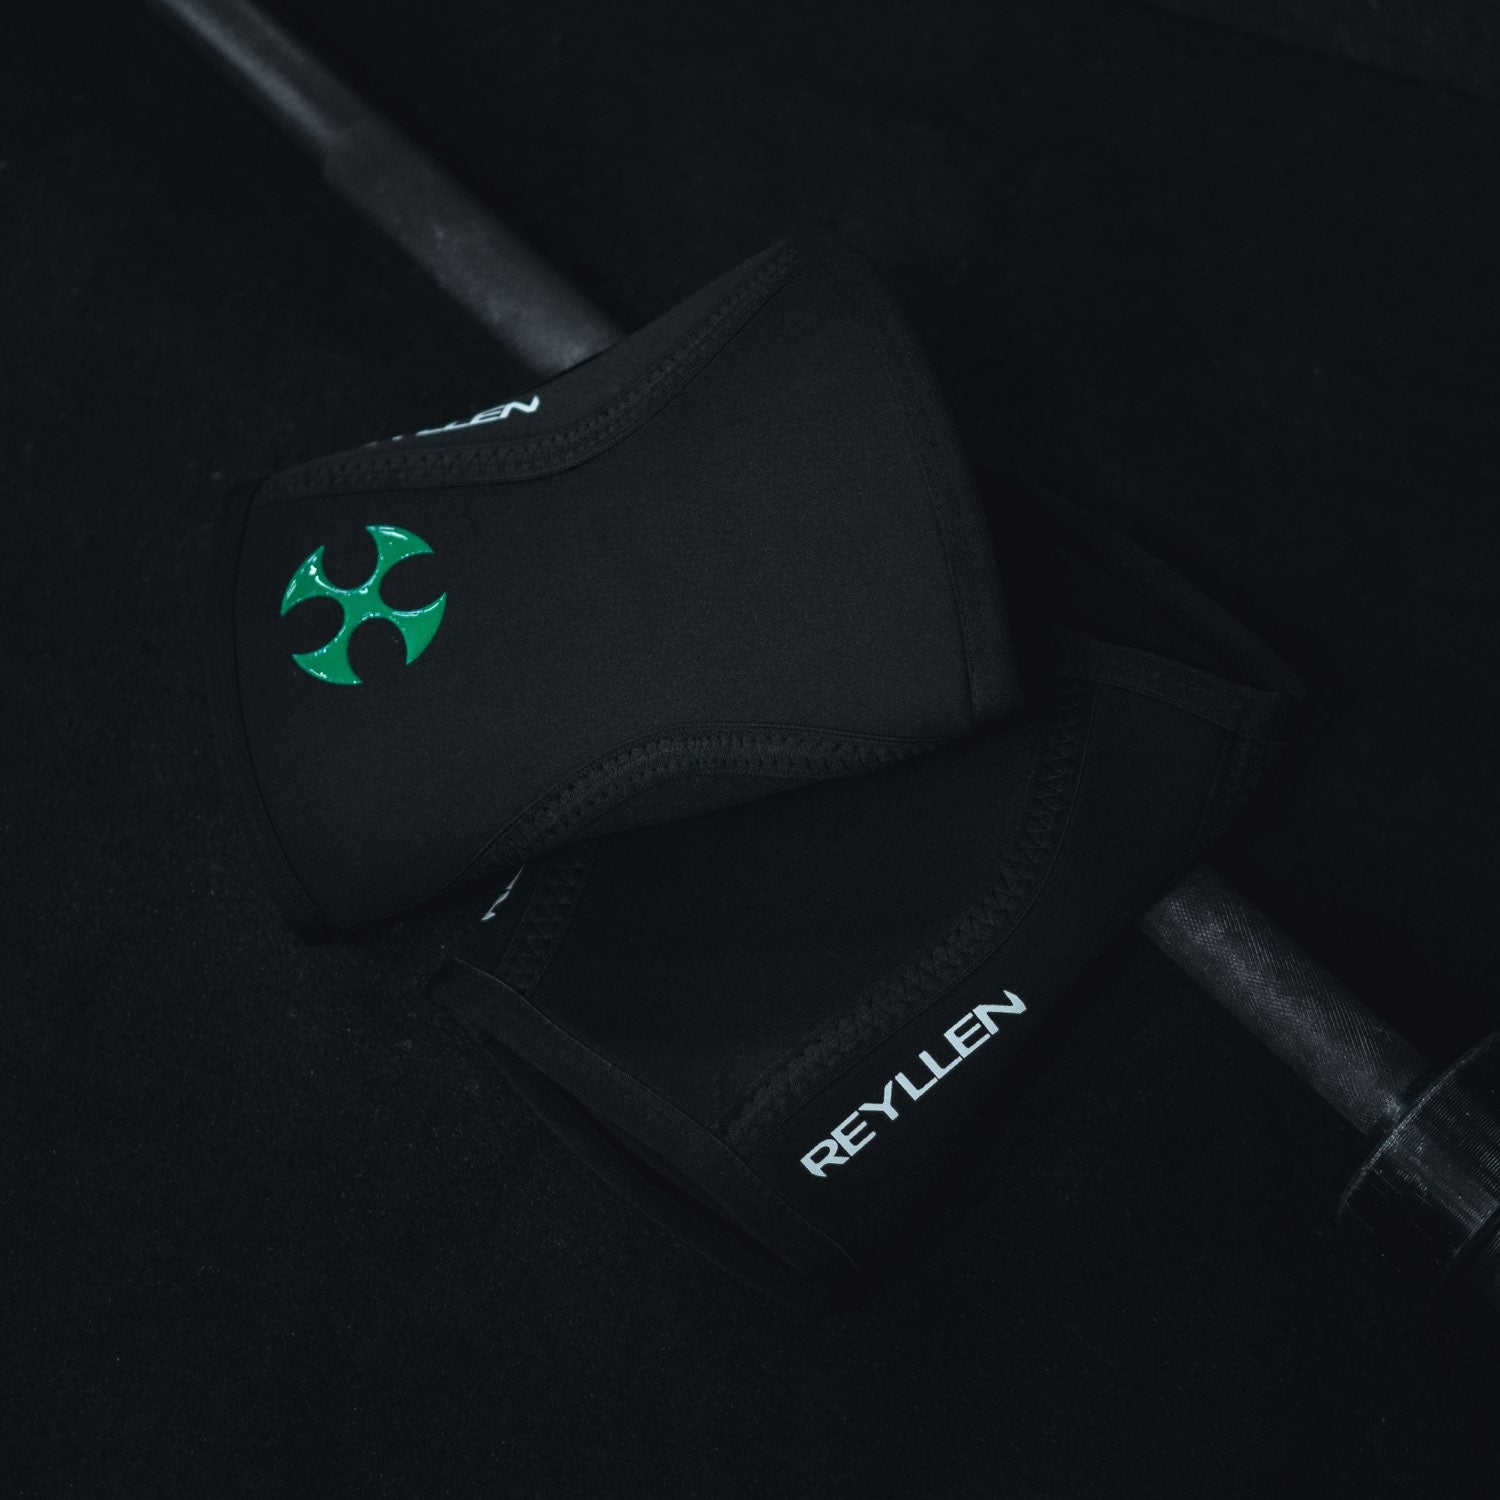 Venta X3 Knee Sleeves Neoprene Brace Compression Support 7mm - Black - lay flat on barbell pair Reyllen 